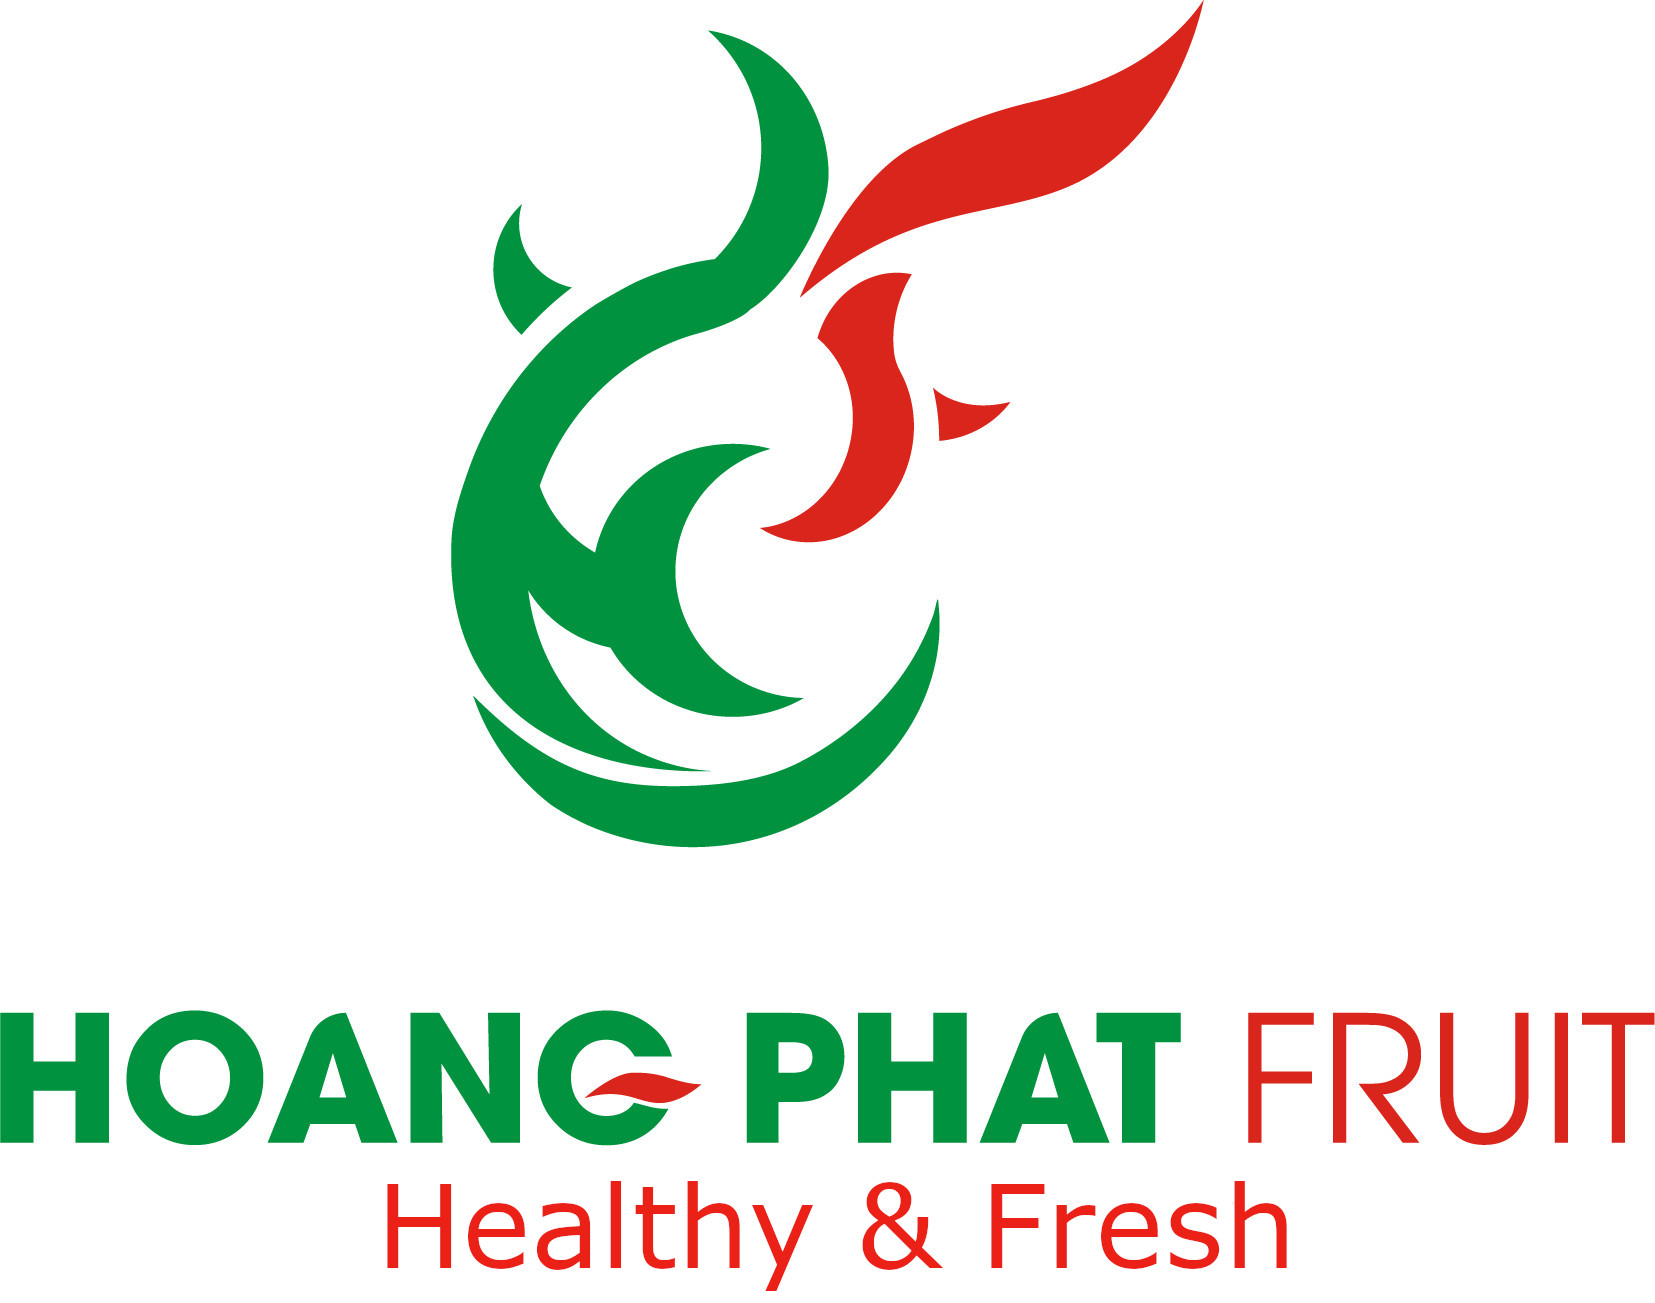 Hoang Phat Fruit